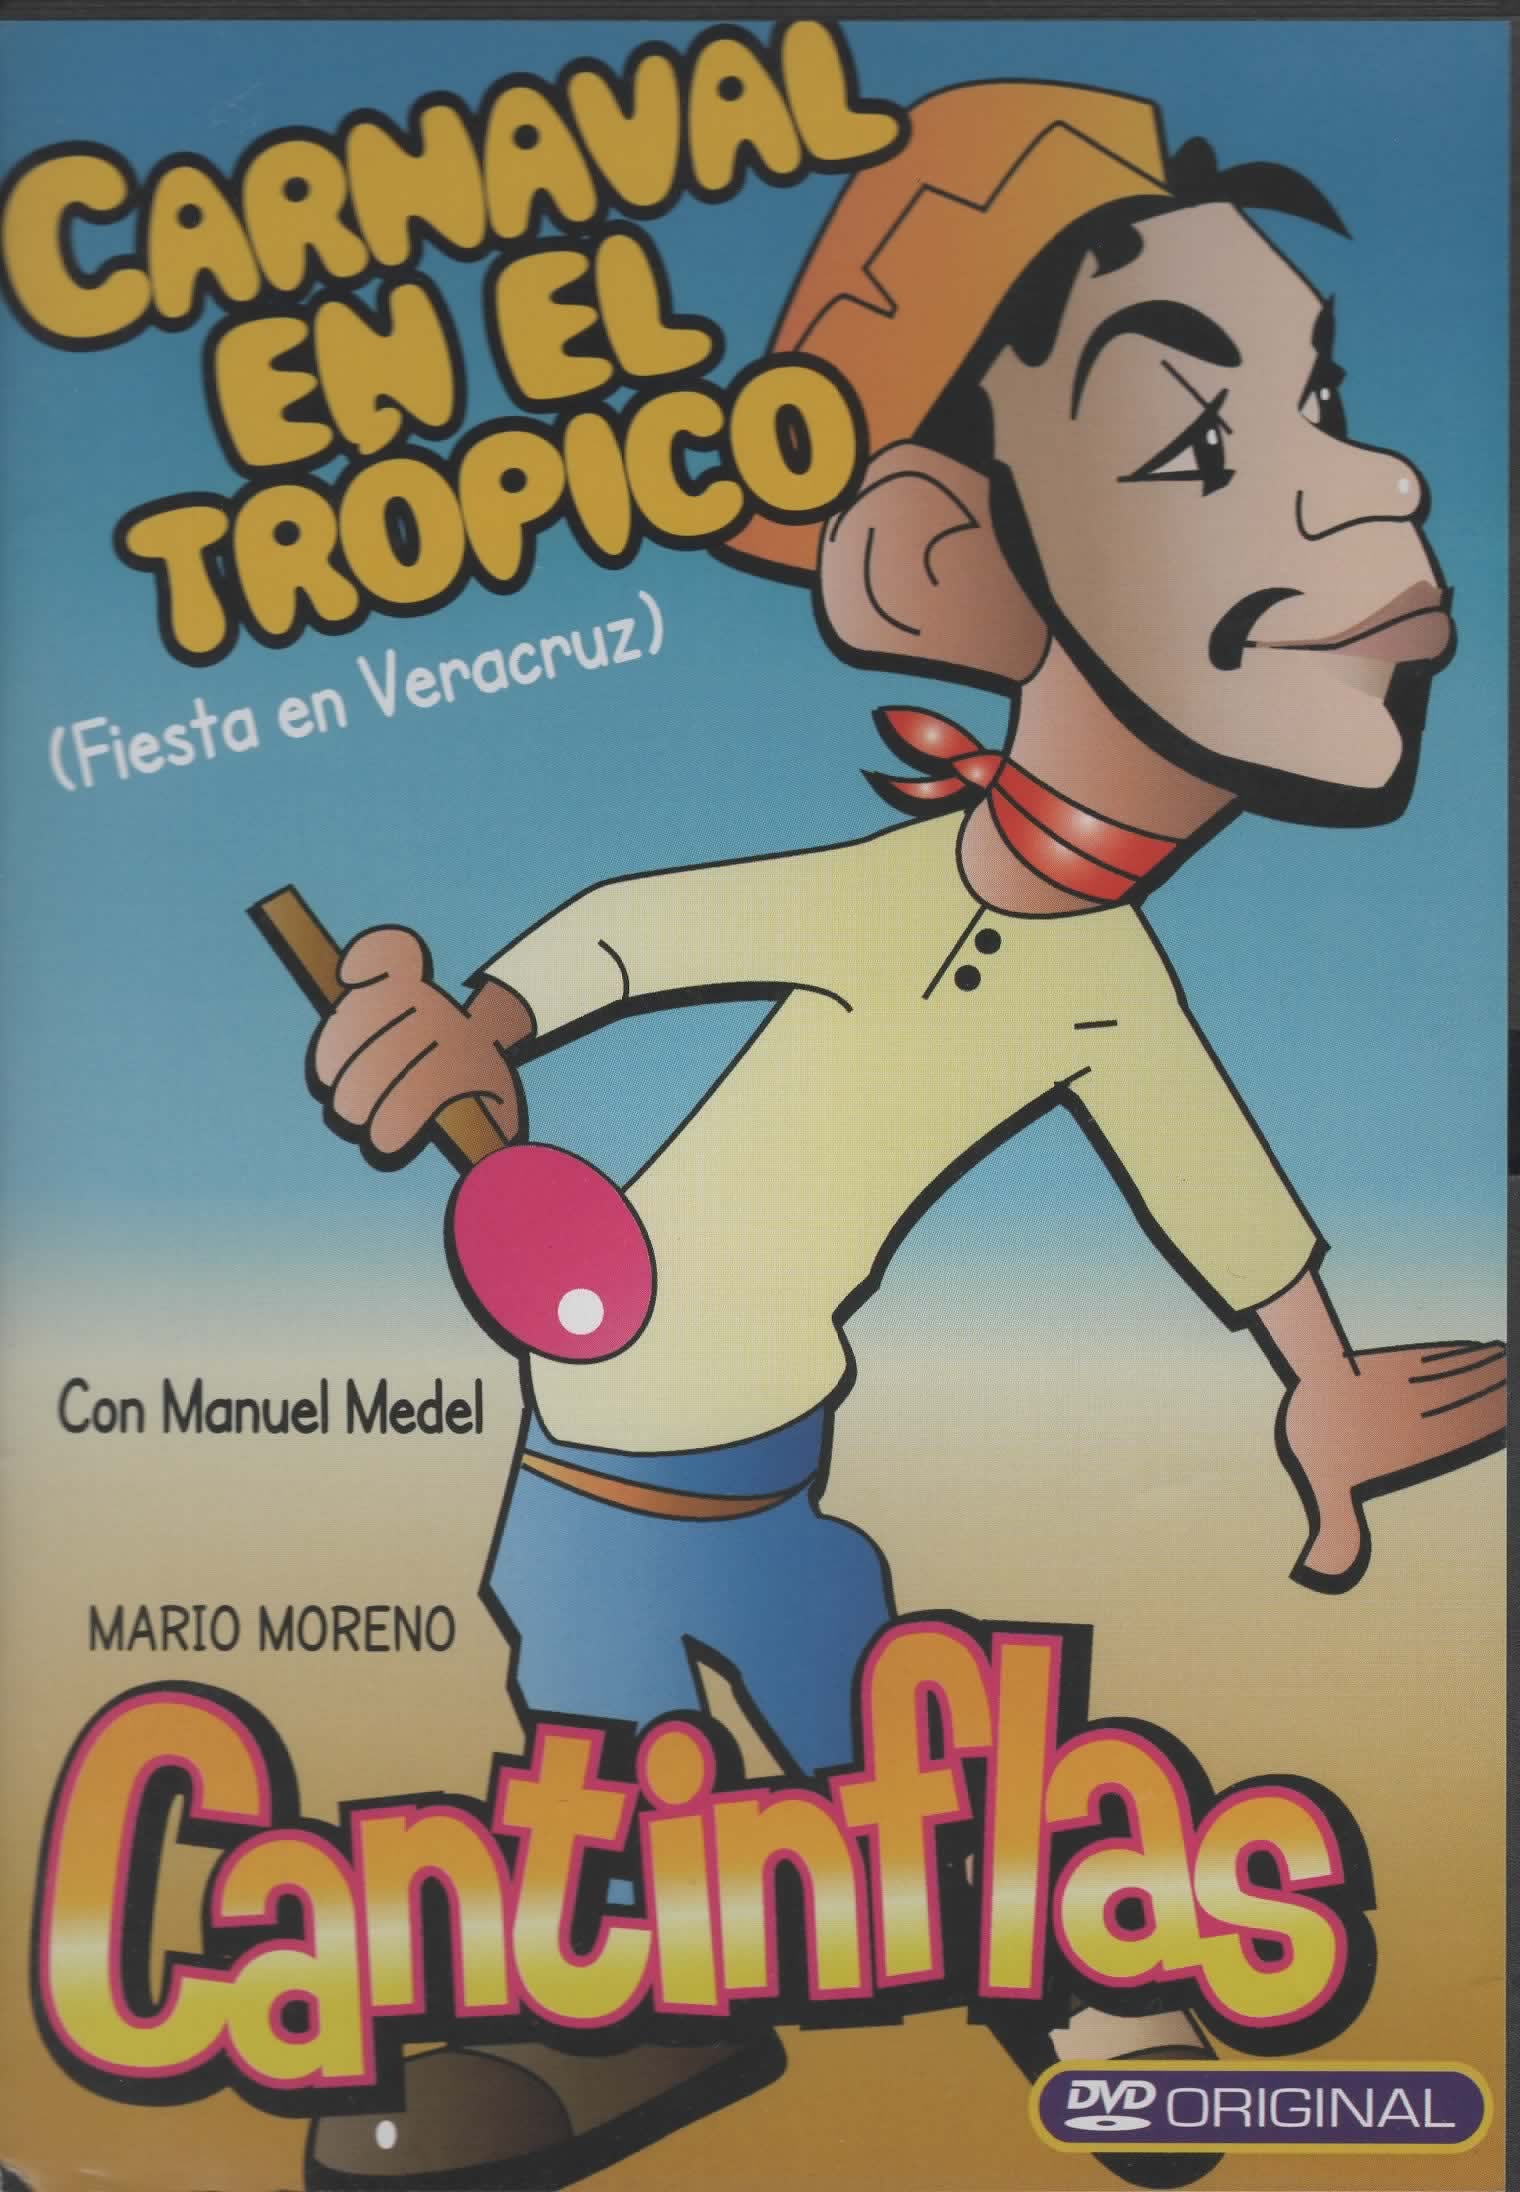 DVD Cantinflas - Carnaval en el trópico 1